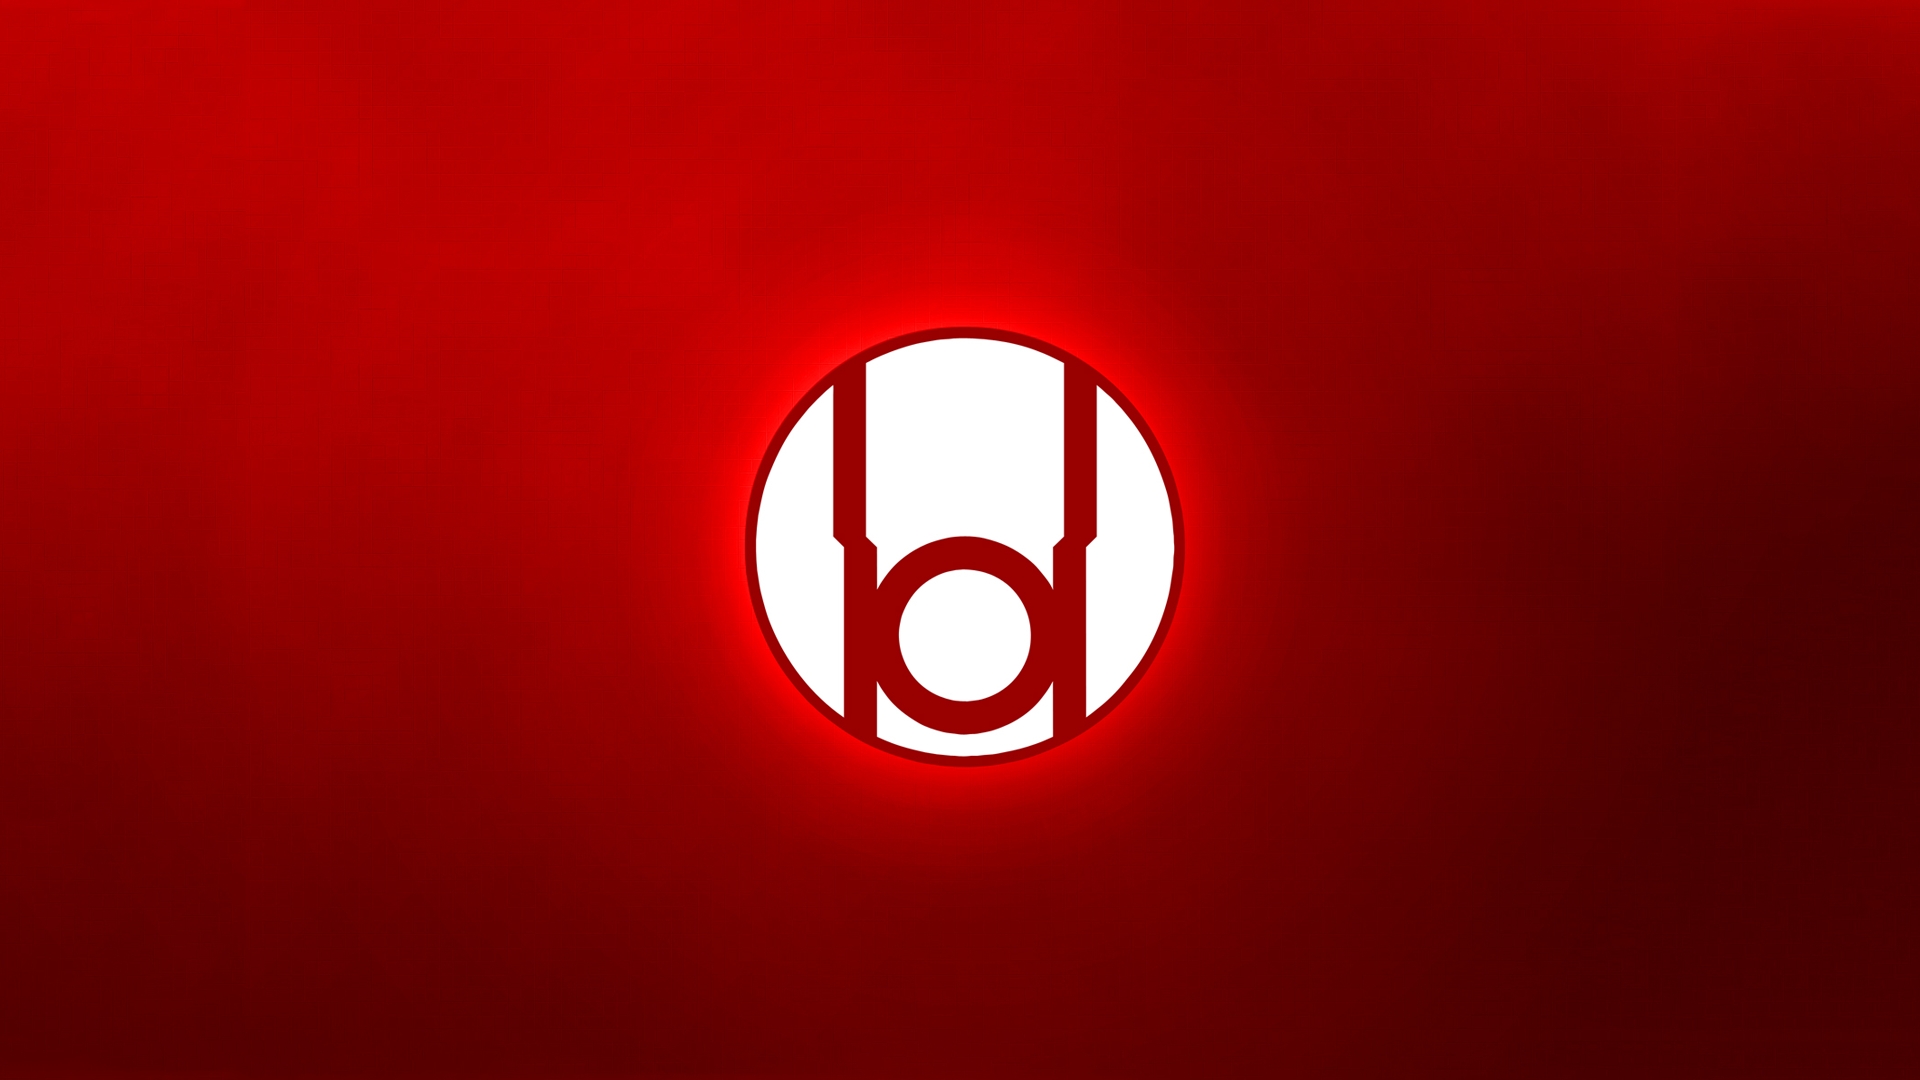 Red Lantern Corps Puter Wallpaper Desktop Background